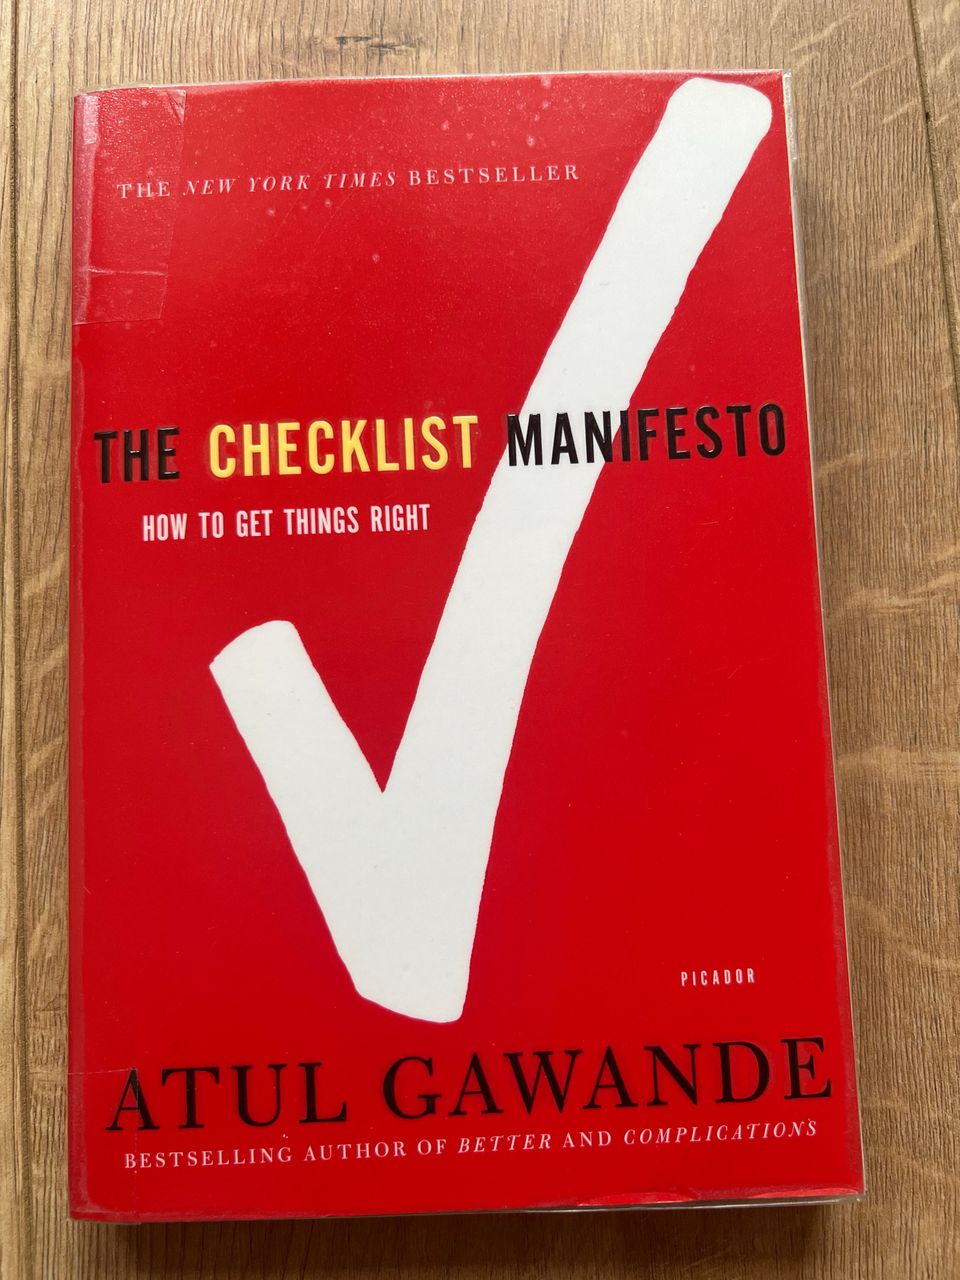 Atul Gawande - The checklist manifesto